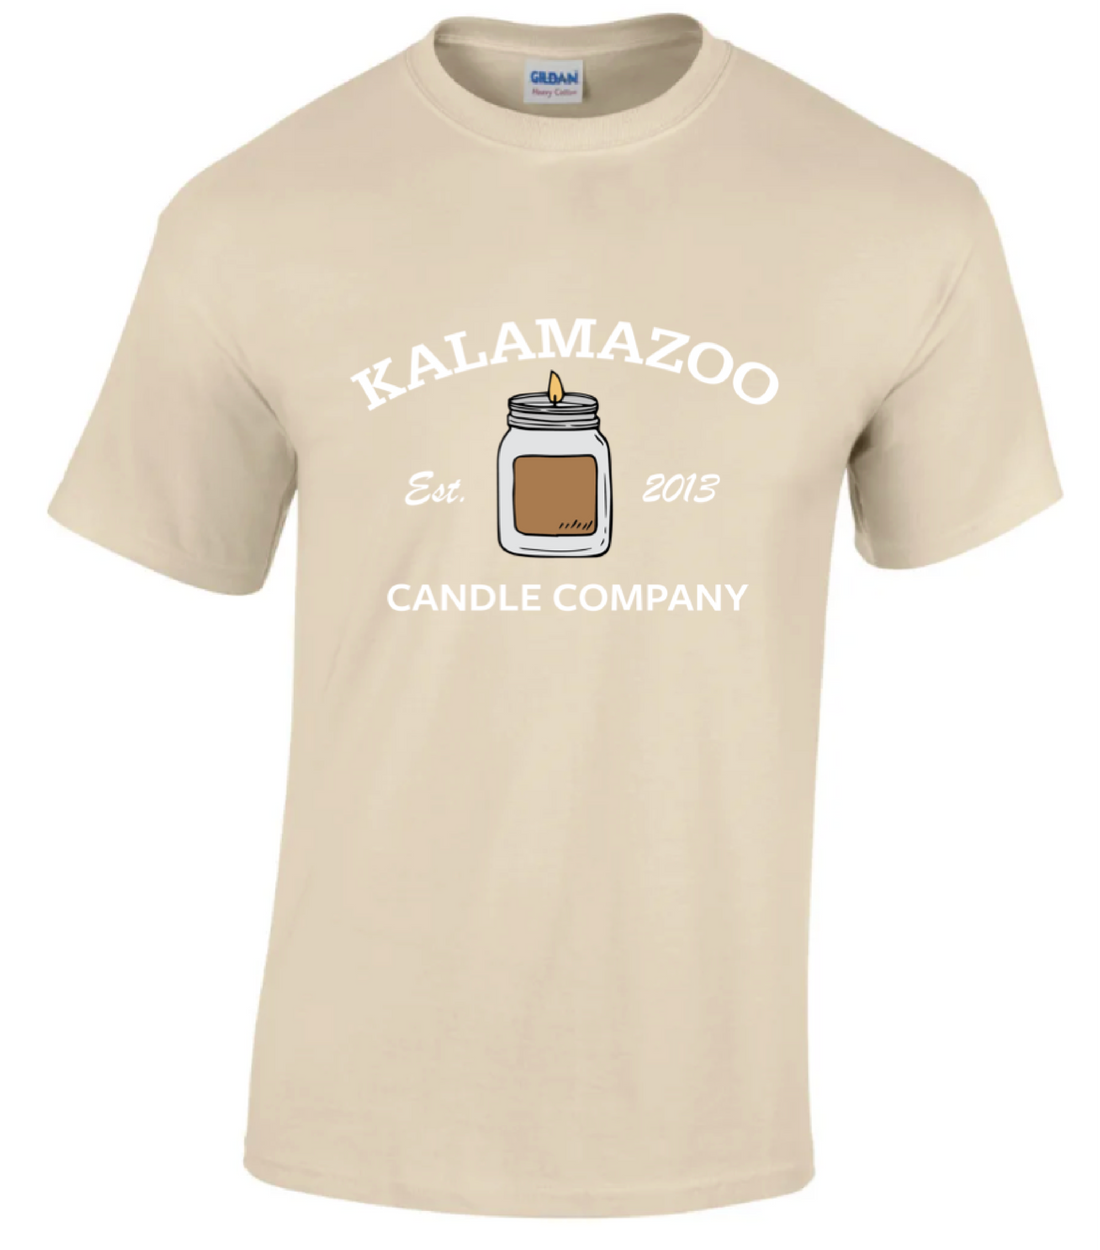 A Tan Kalamazoo Candle Company T-Shirt